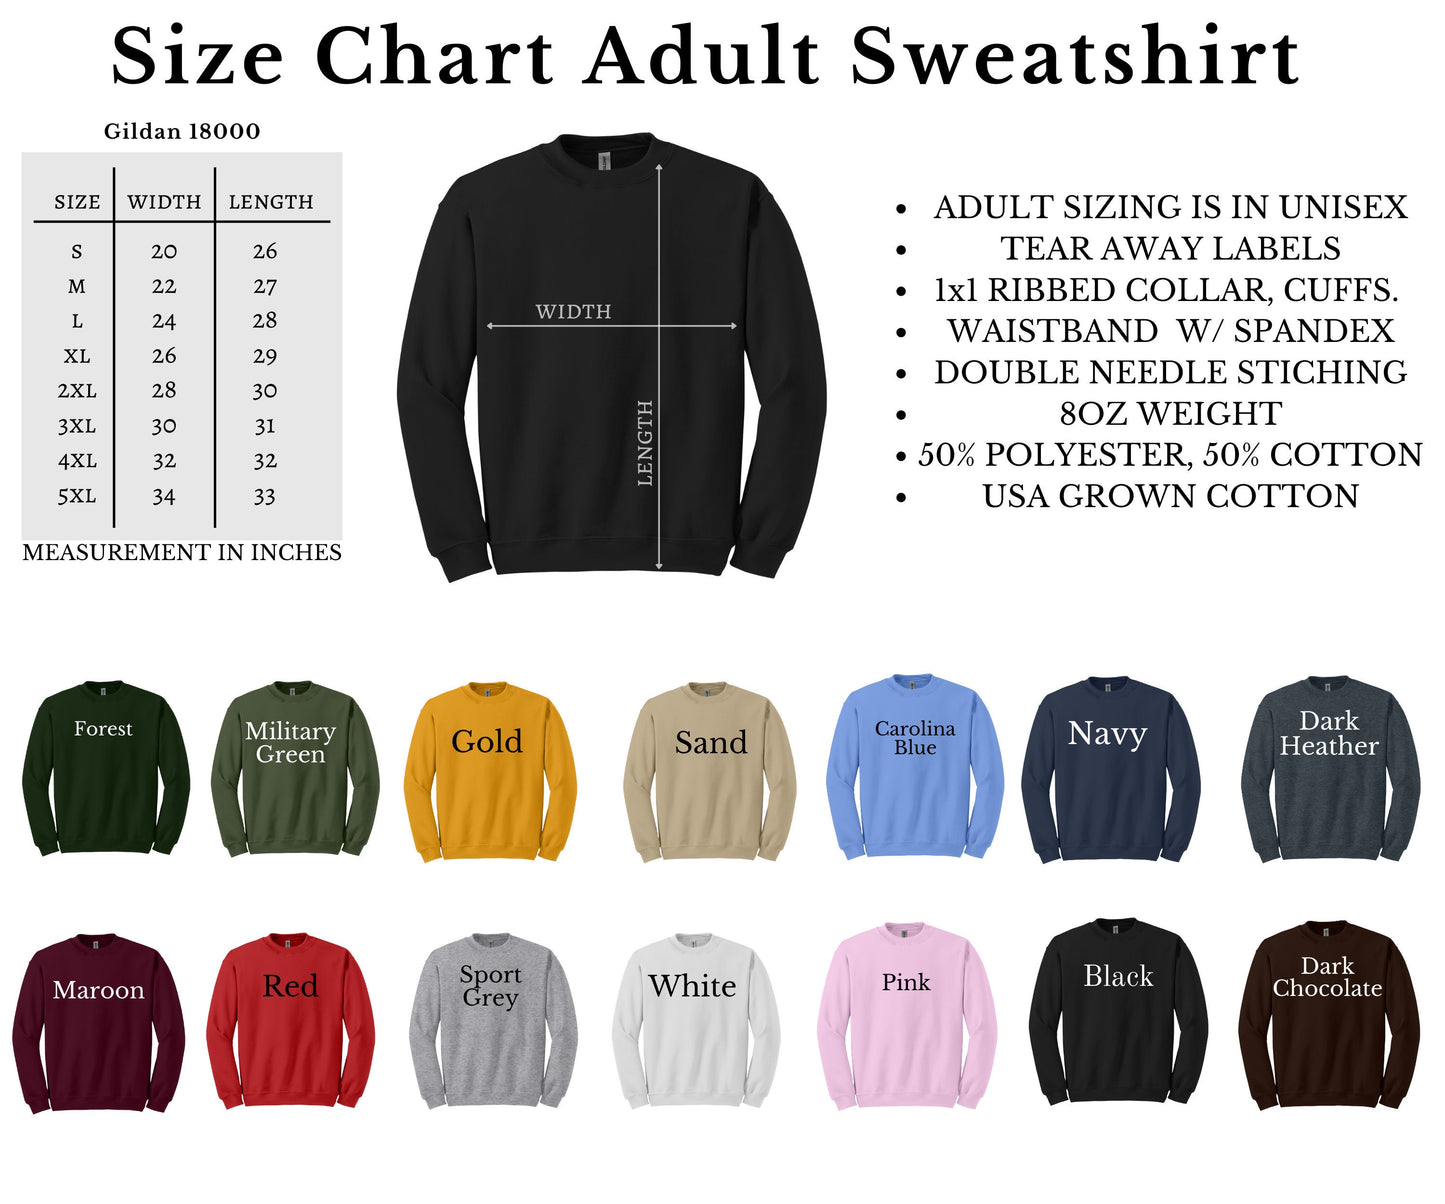 Not Grandmas Favorite Sweatshirt, Not Grandma Favorite Tee, Not Grandmas Favorite Crewneck, Not Grandmas Favorite Sweater, Oversize Sweater